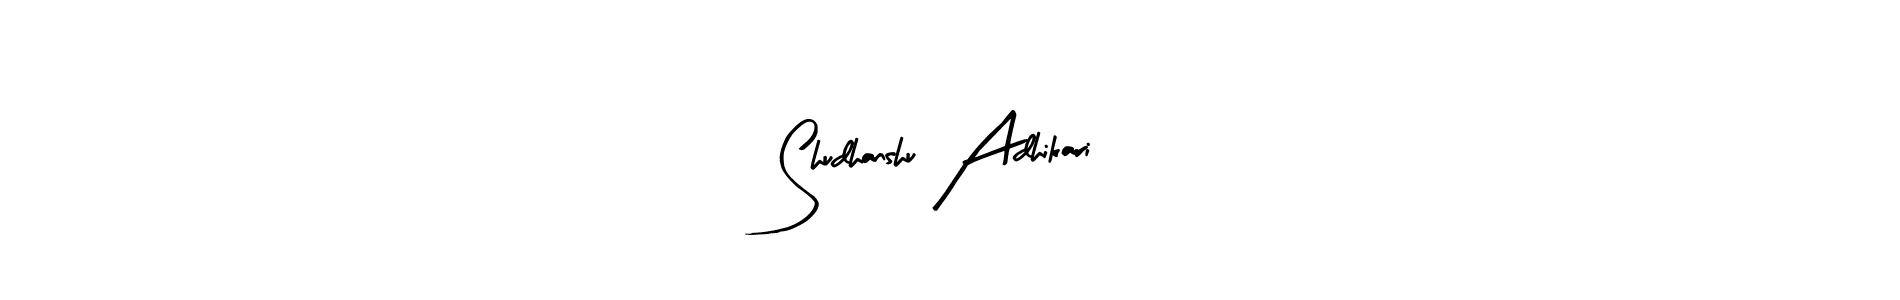 Make a beautiful signature design for name Shudhanshu Adhikari. Use this online signature maker to create a handwritten signature for free. Shudhanshu Adhikari signature style 8 images and pictures png